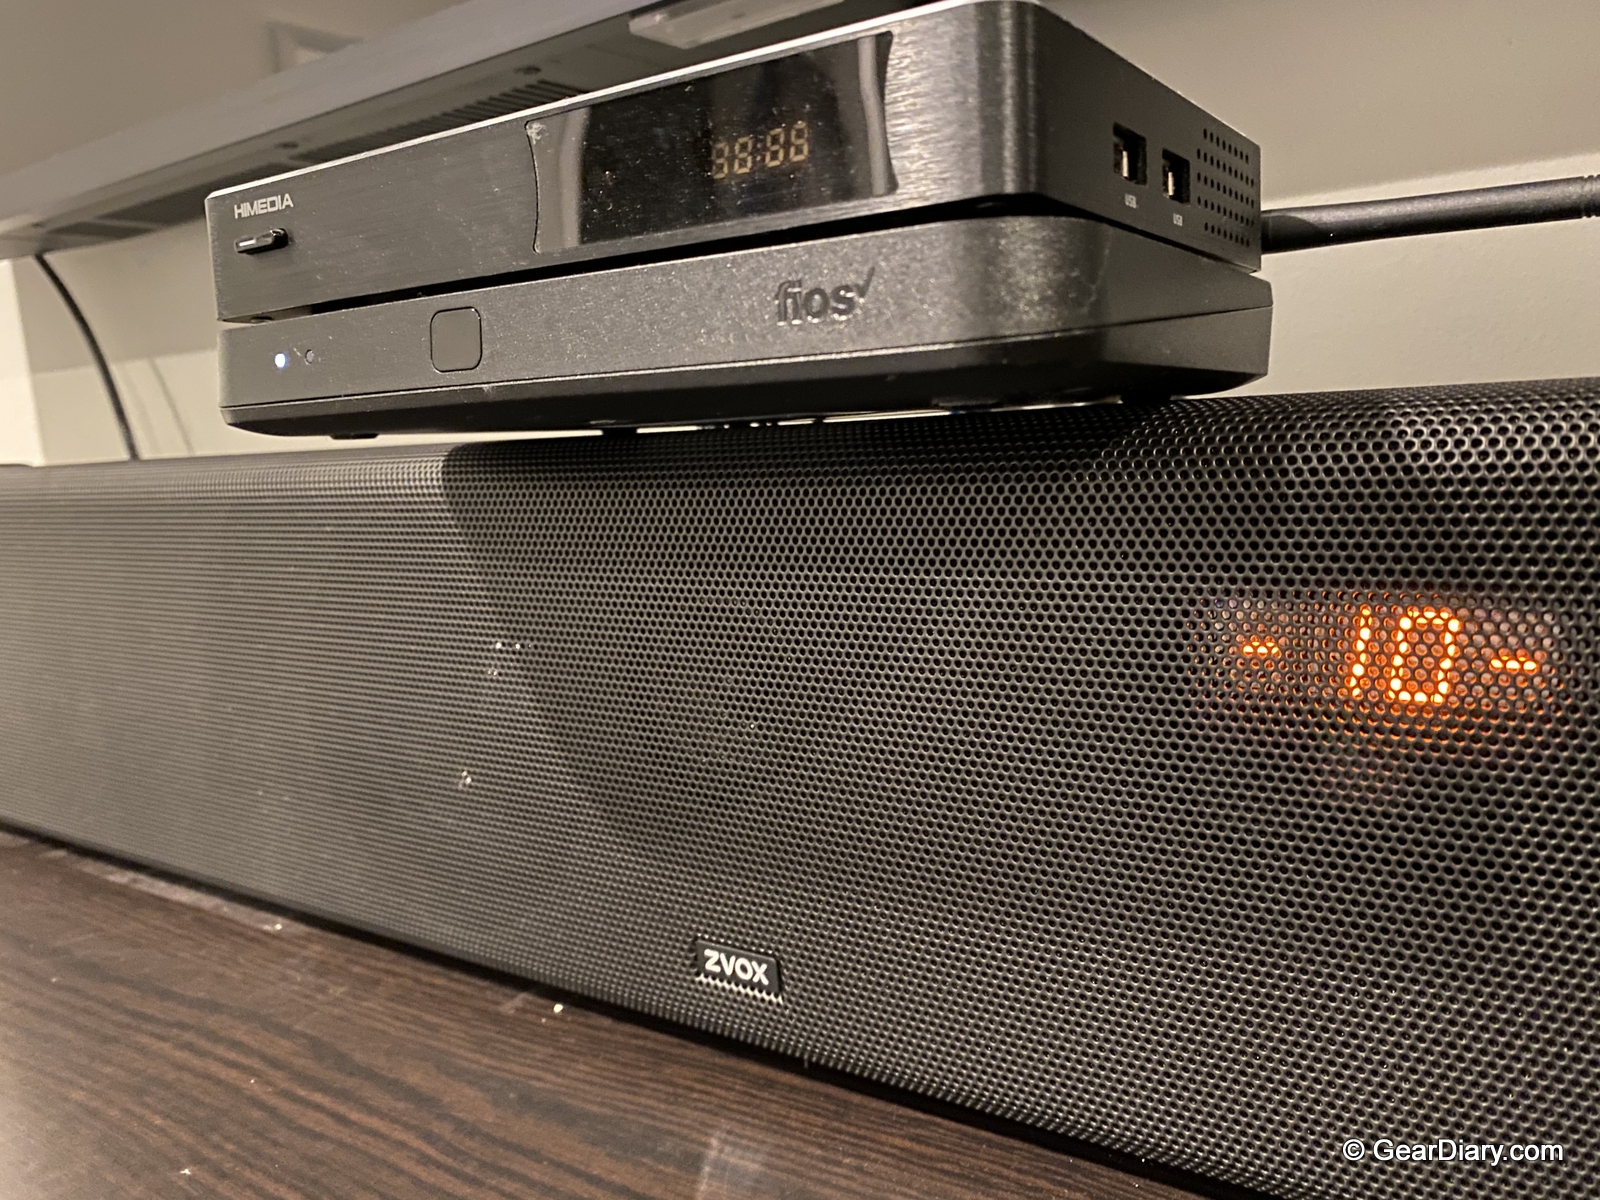 Zvox SB380 Soundbar Is a Nice Upgrade from Your TV's Built-in Speakers